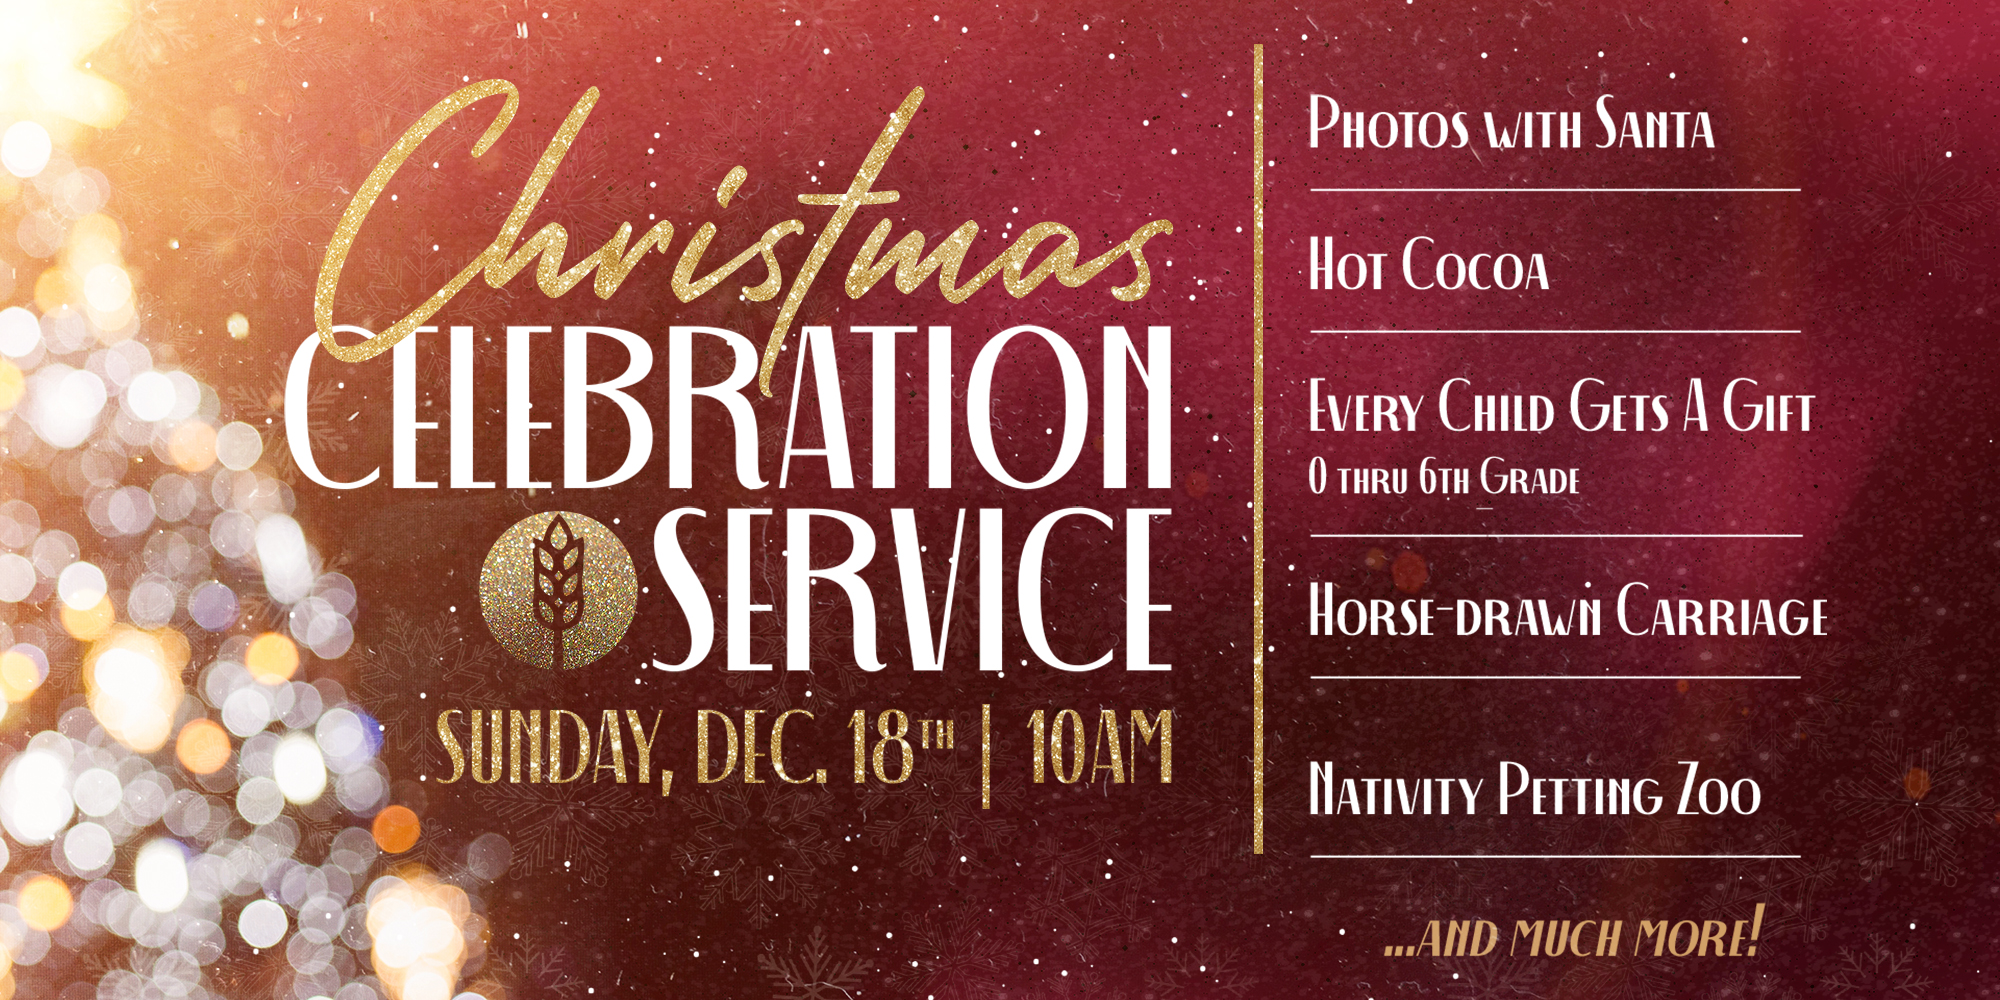 Christmas Celebration Service Sunday, Dec. 18th 10am